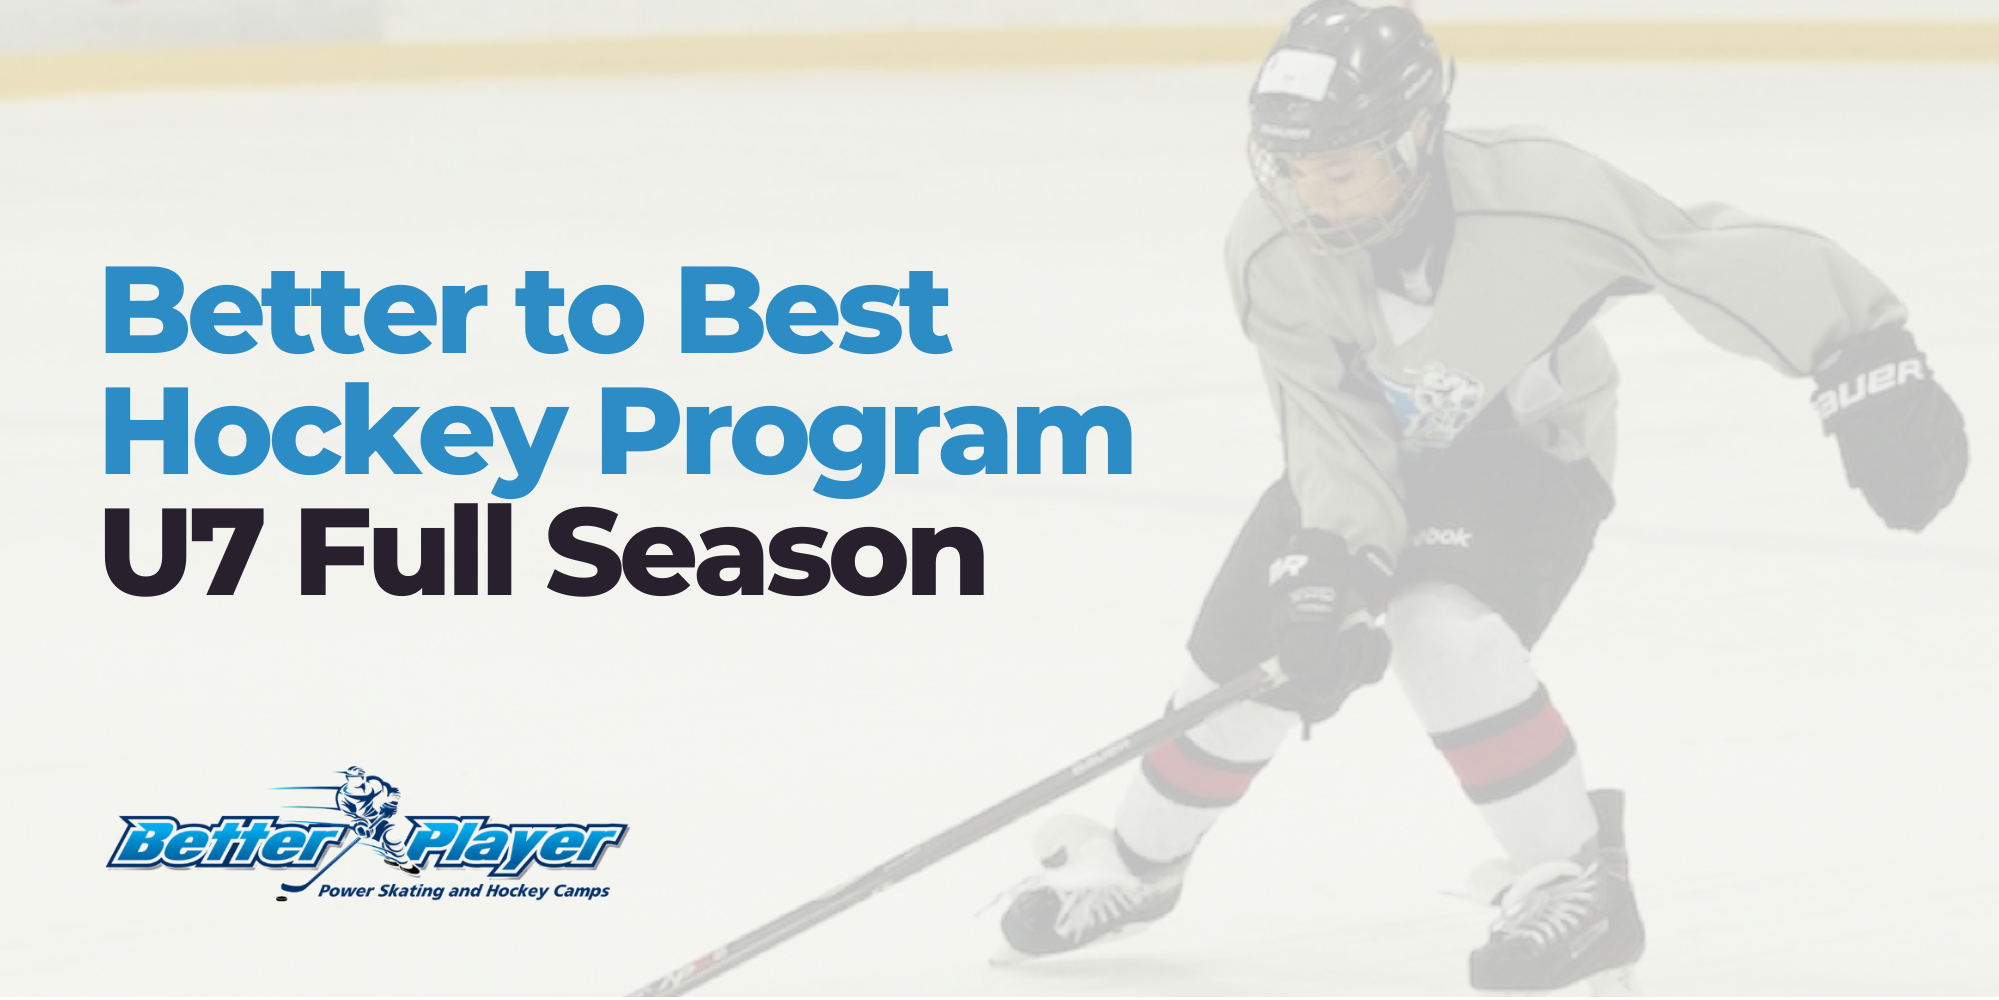 U7 Full Season | Better to Best Hockey Program